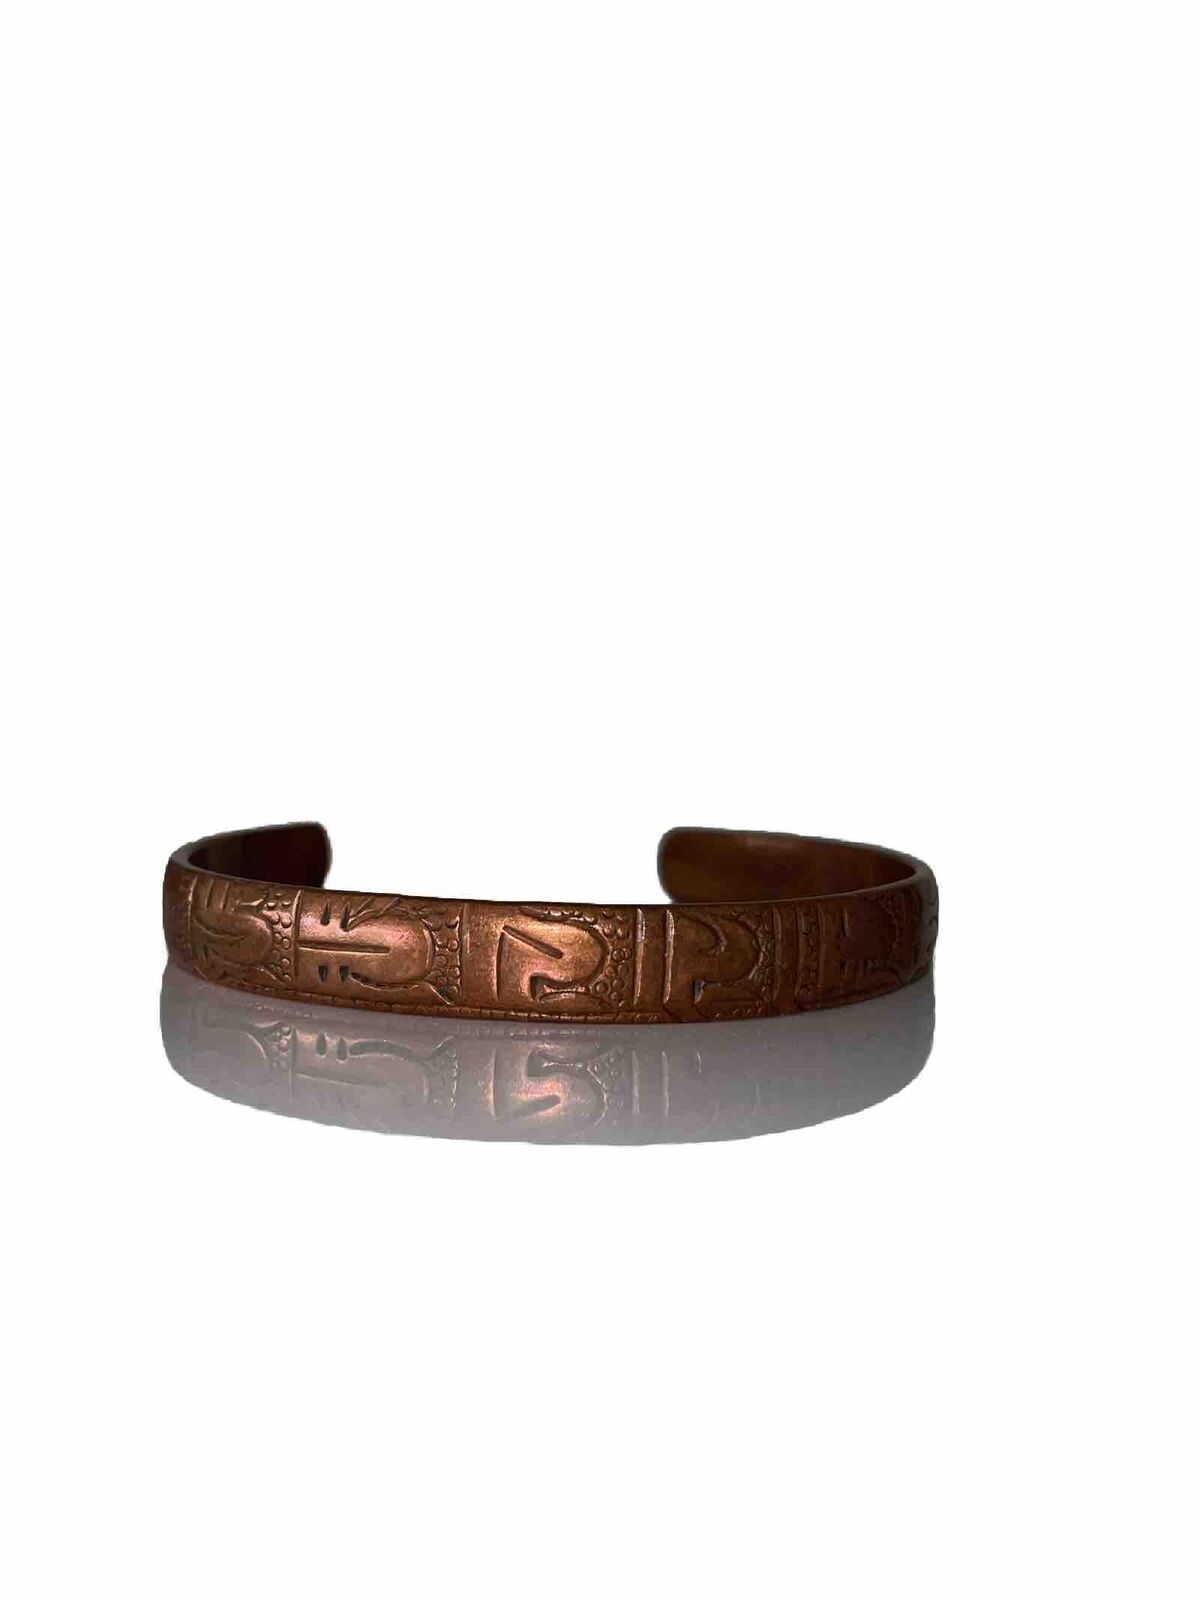 Solid Copper Native Designs Cuff Bracelet Healing Pain